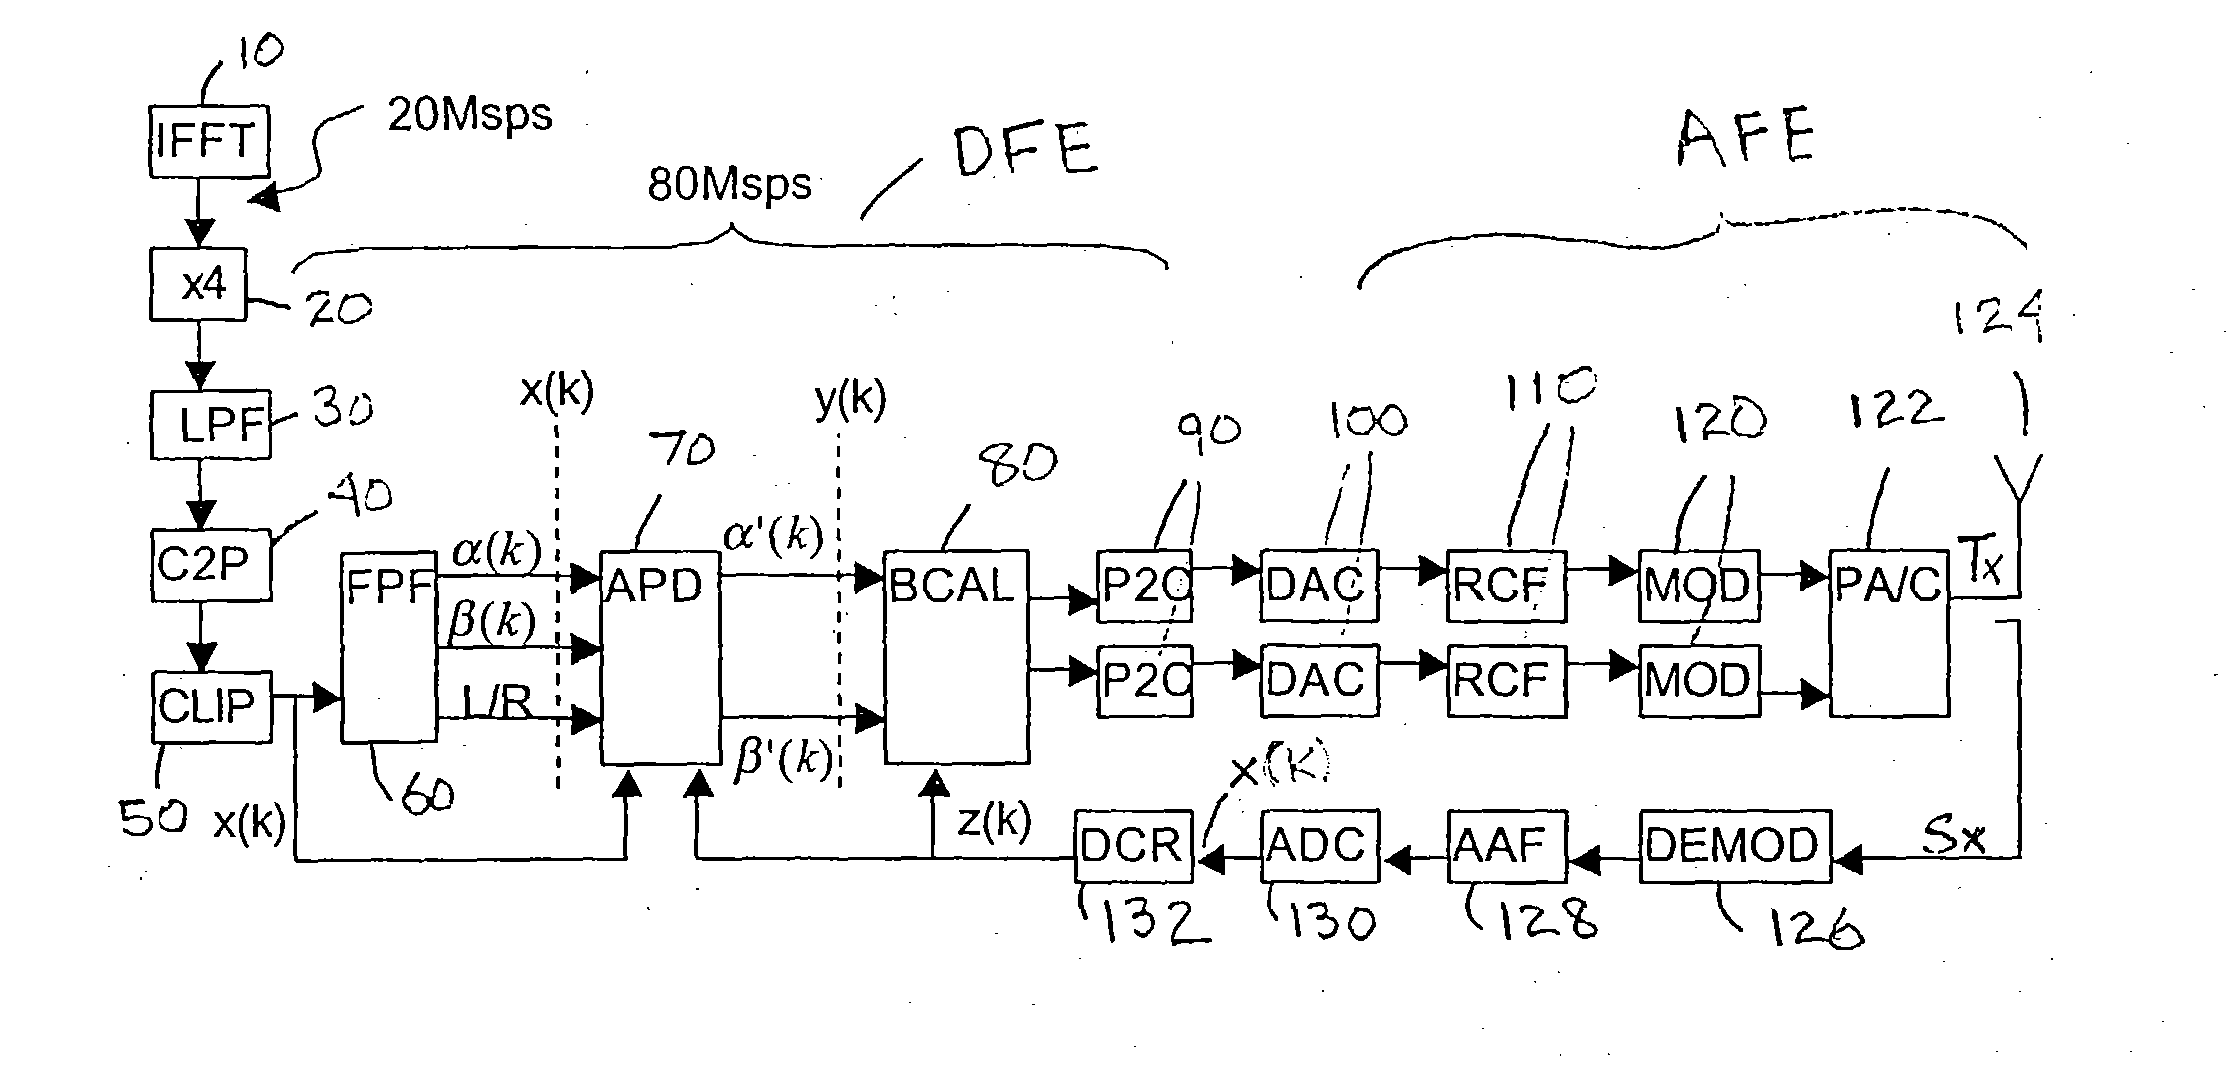 Digital branch calibrator for an RF transmitter